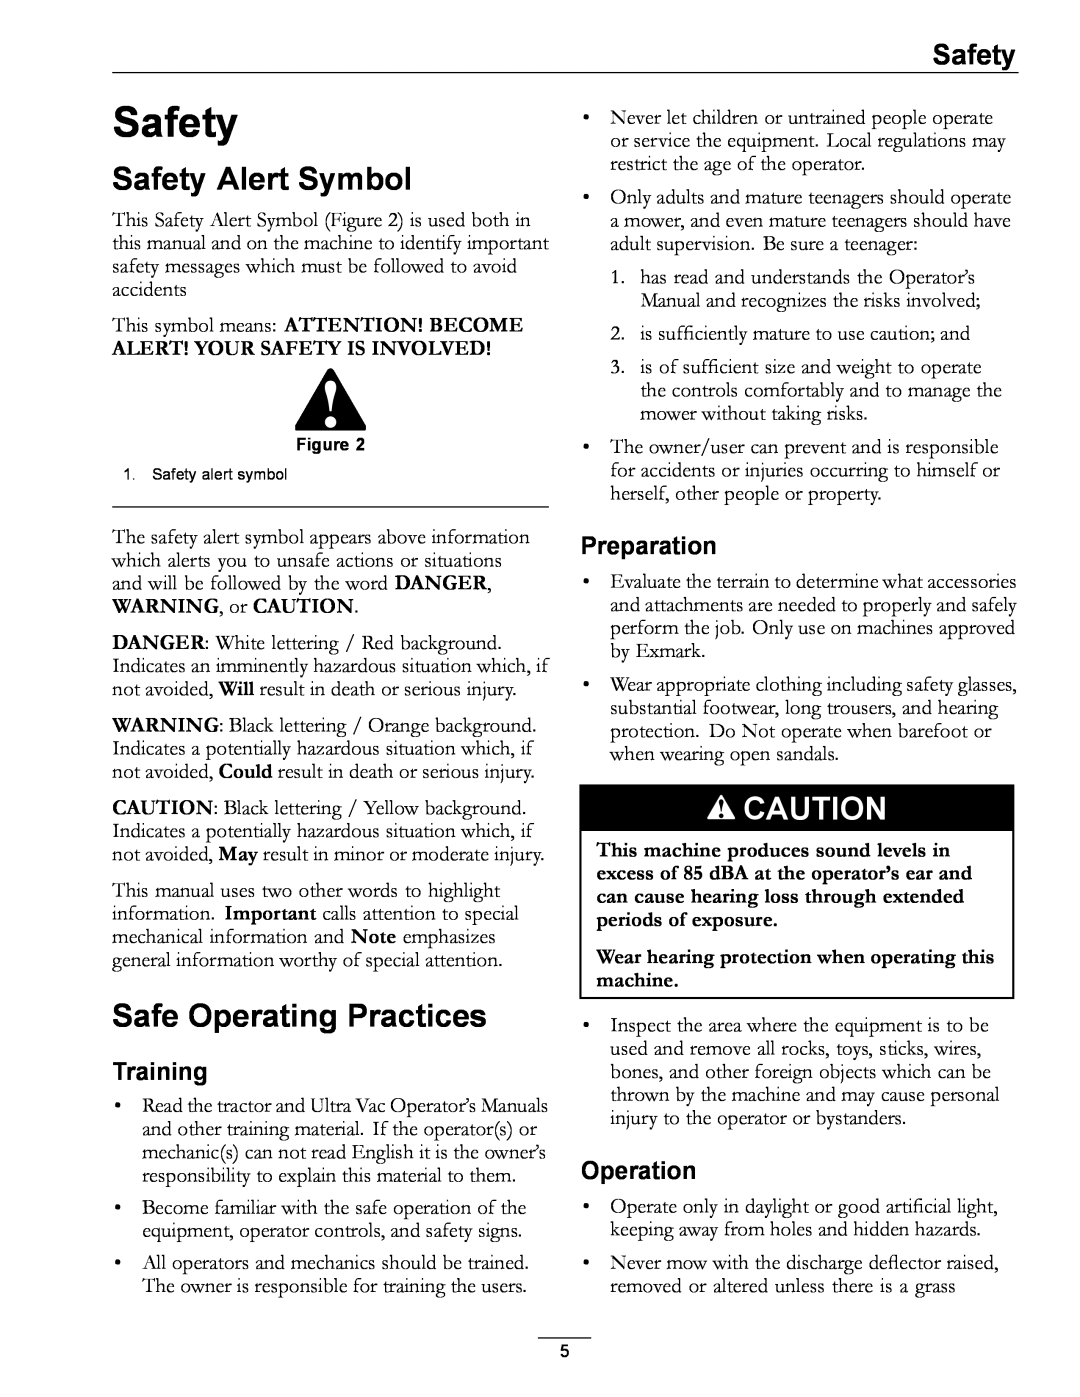 Exmark 850, 000 & higher manual Safety Alert Symbol, Safe Operating Practices, Training, Preparation, Operation 